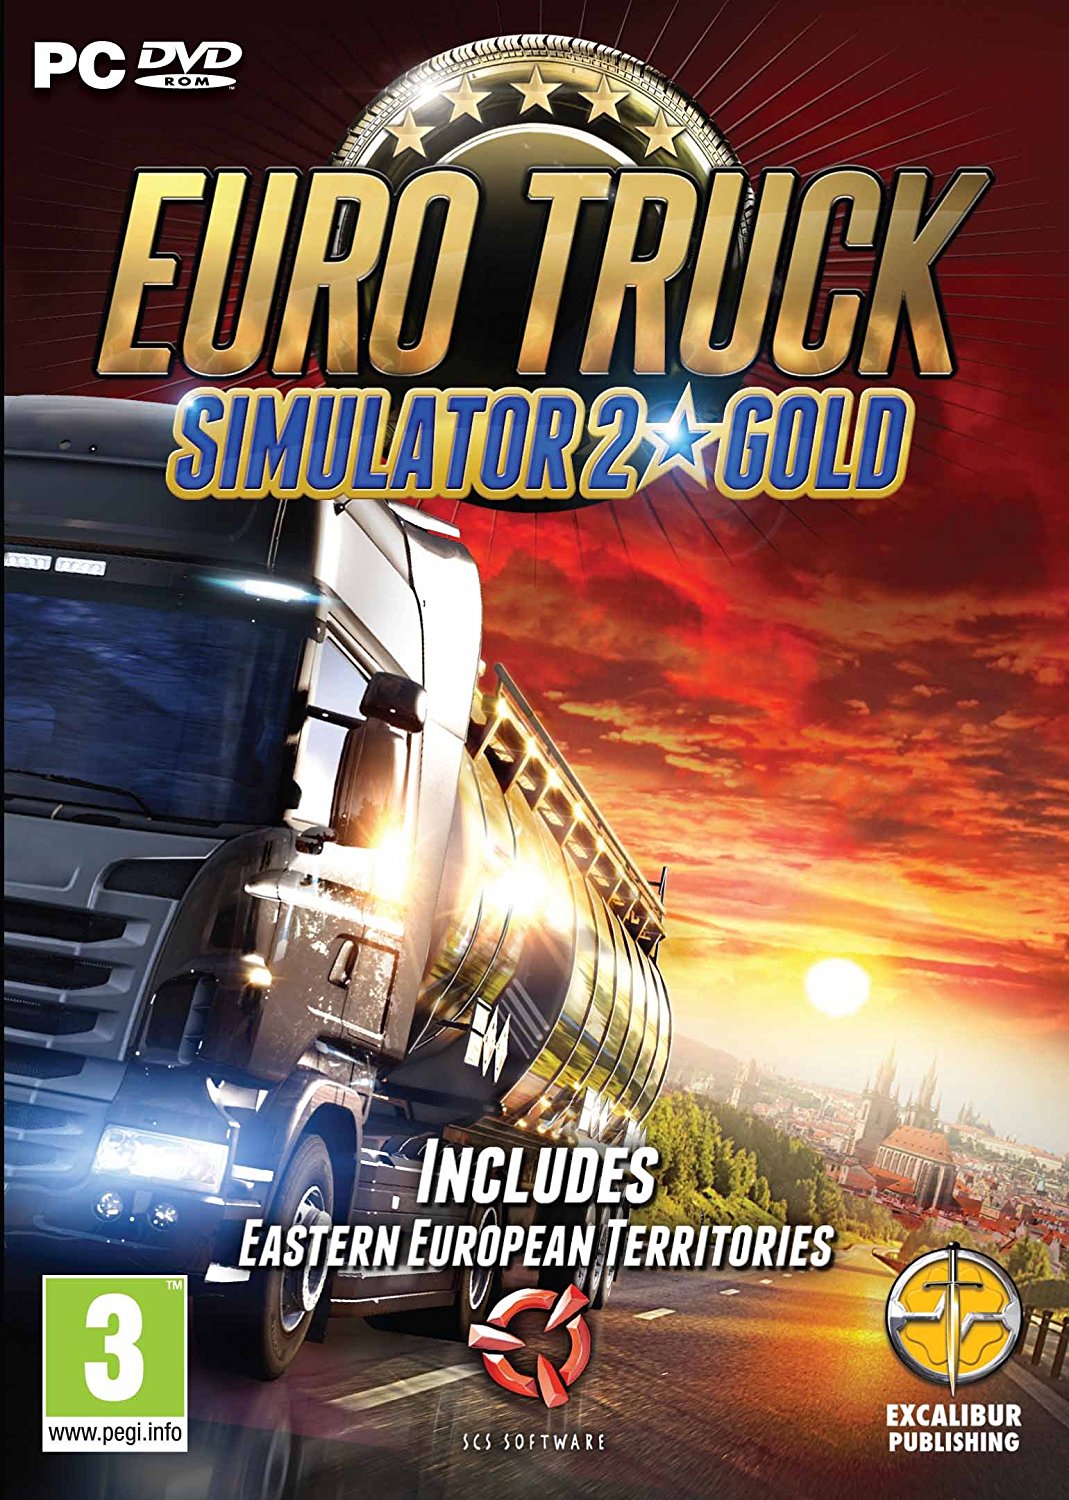 Euro Truck Simulator Kostenlos Downloaden